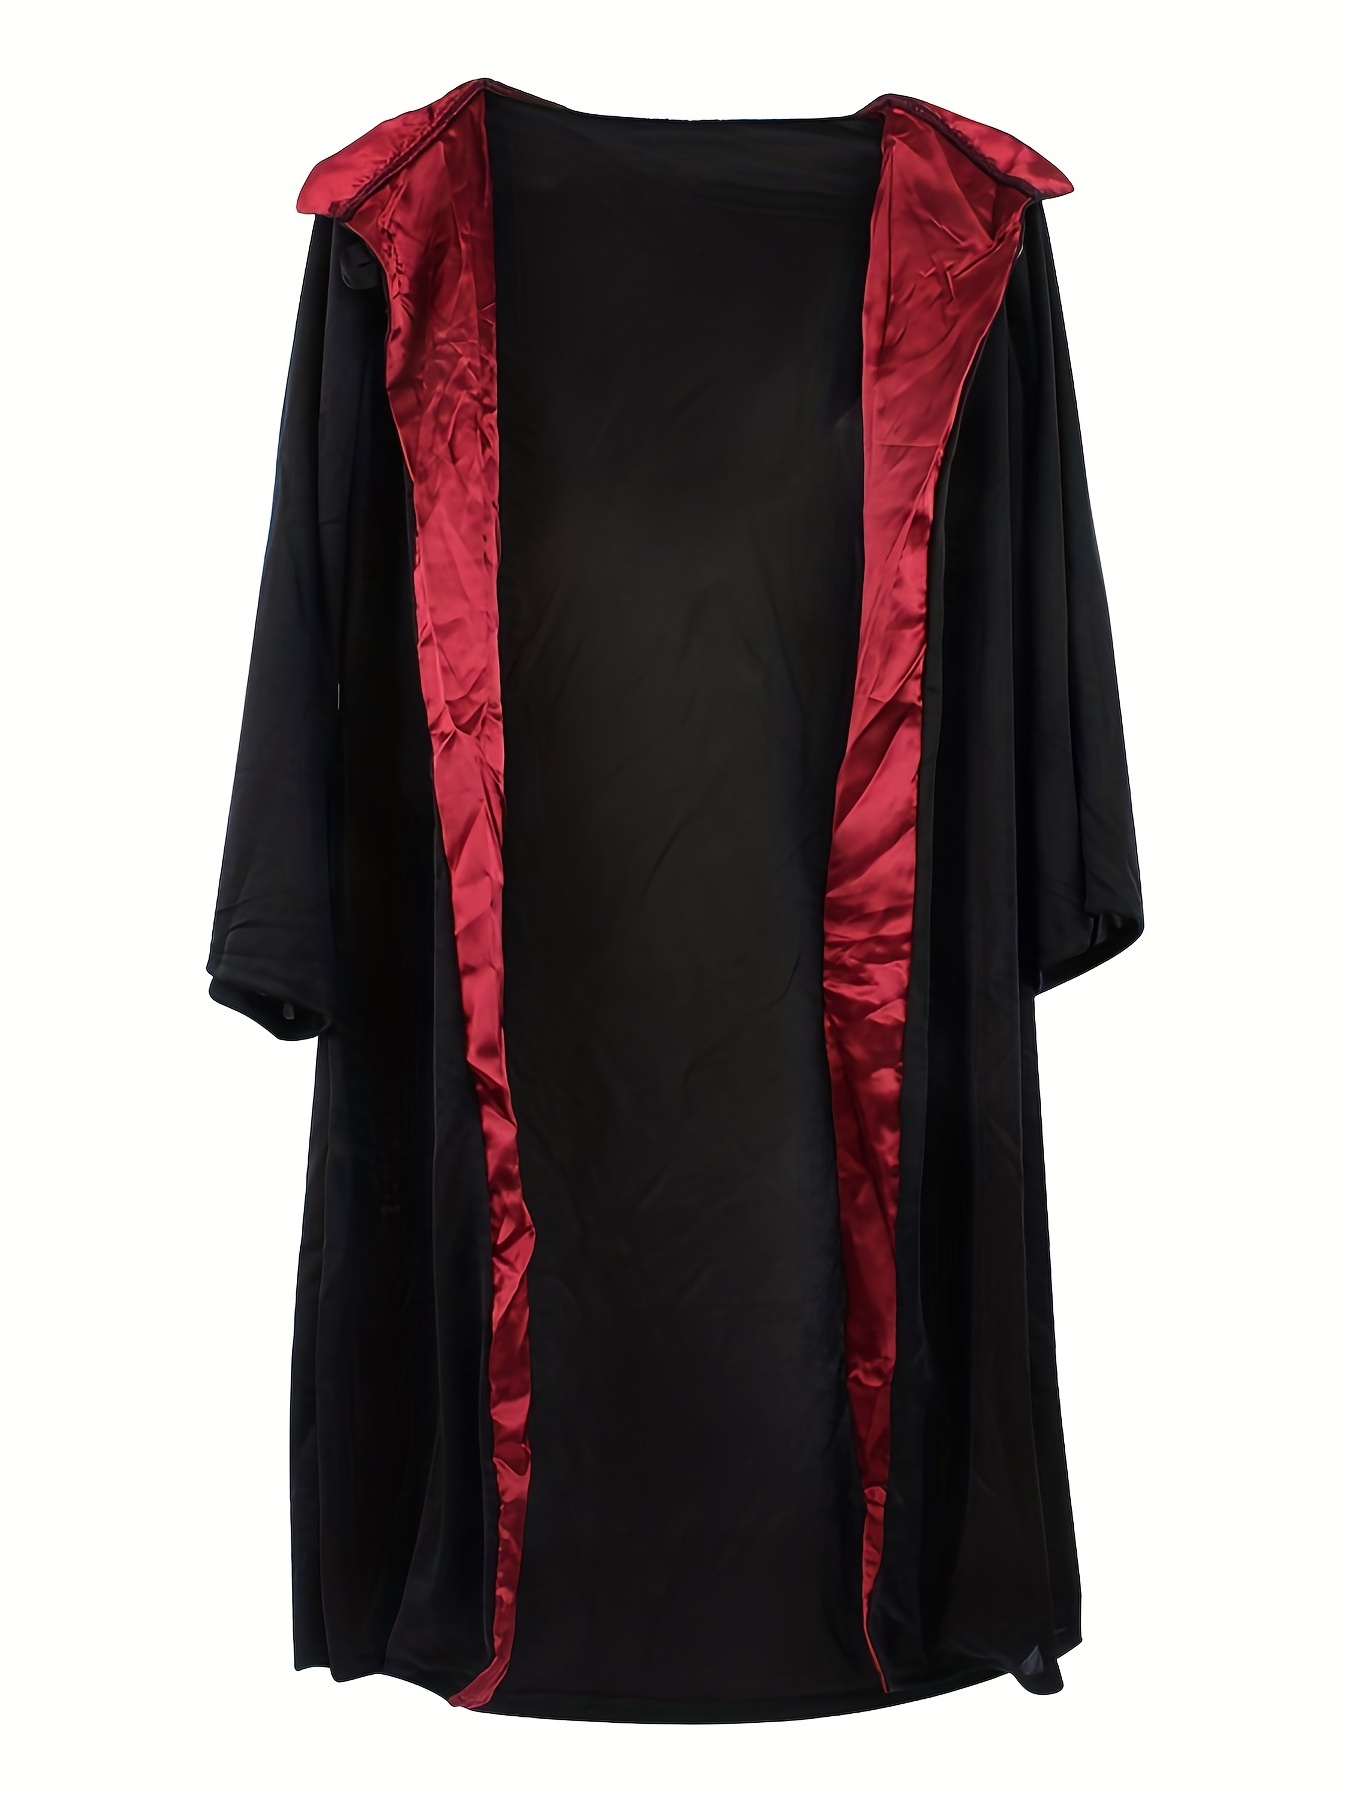 Satin Black Red Robe, Ritual Robe, Long Hooded Robe, Monk Robe, Magical Robe,  Witch Robe, Vampire Robe 